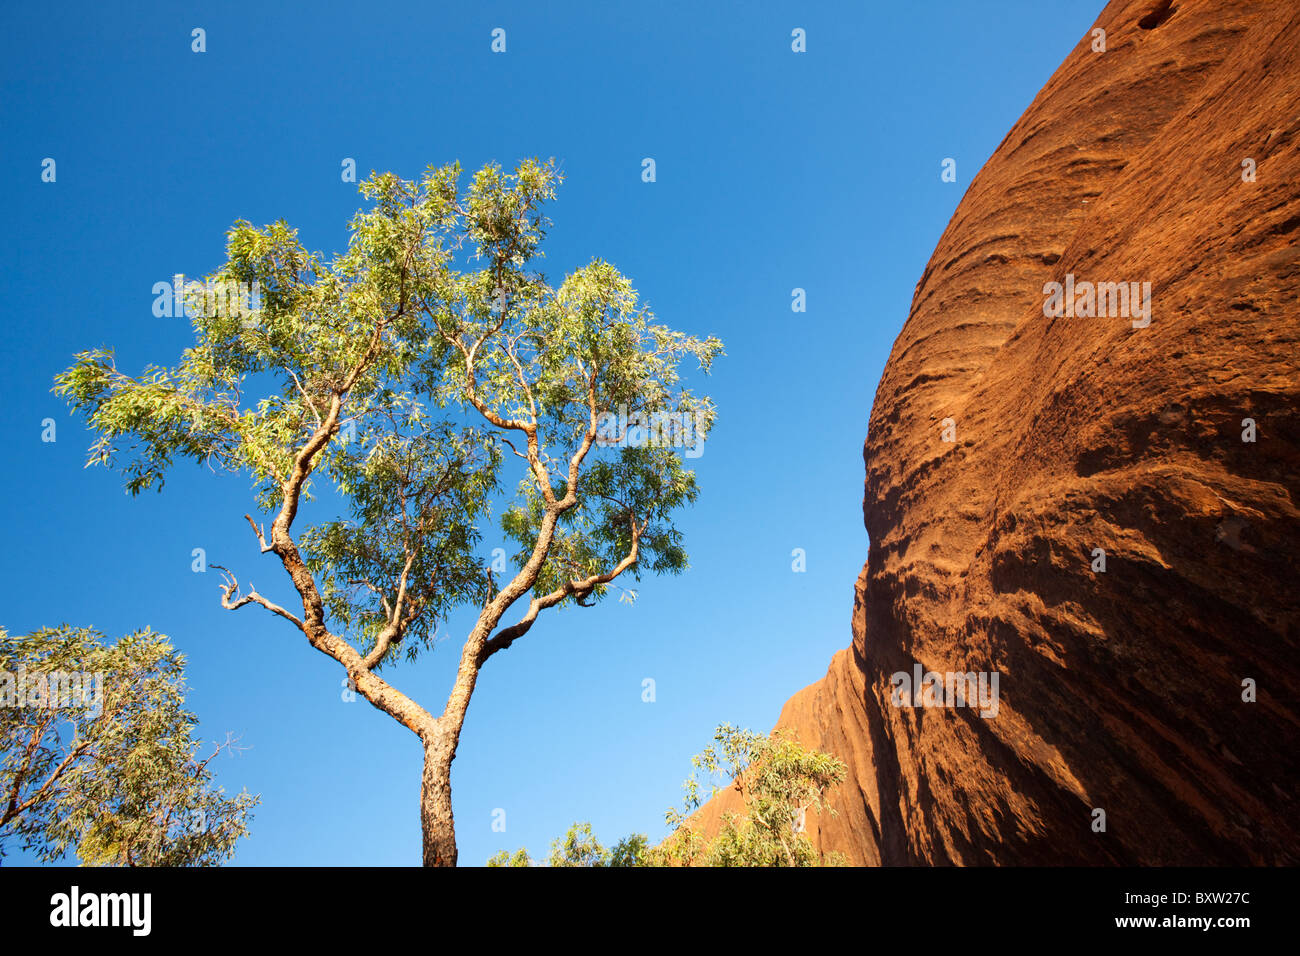 Australien-Northern Territory Uluru - Kata Tjuta National Park Wüste Eiche Baum an roten Felsen Ayers Rock am Sommermorgen Stockfoto